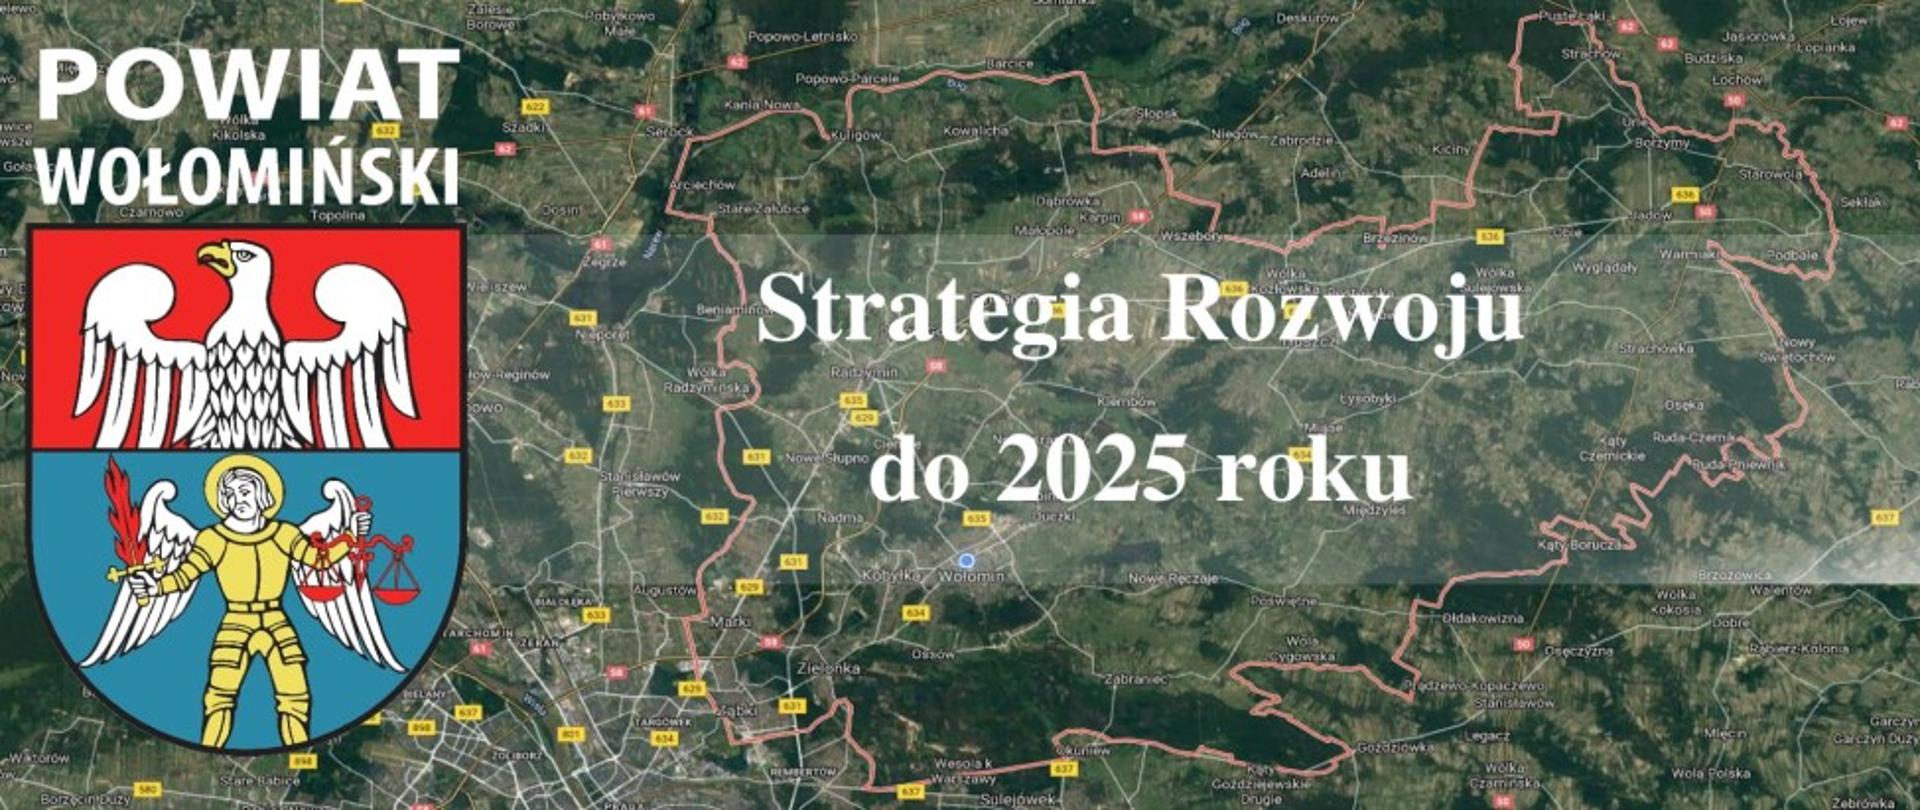 Strategia Rozwoju 2025